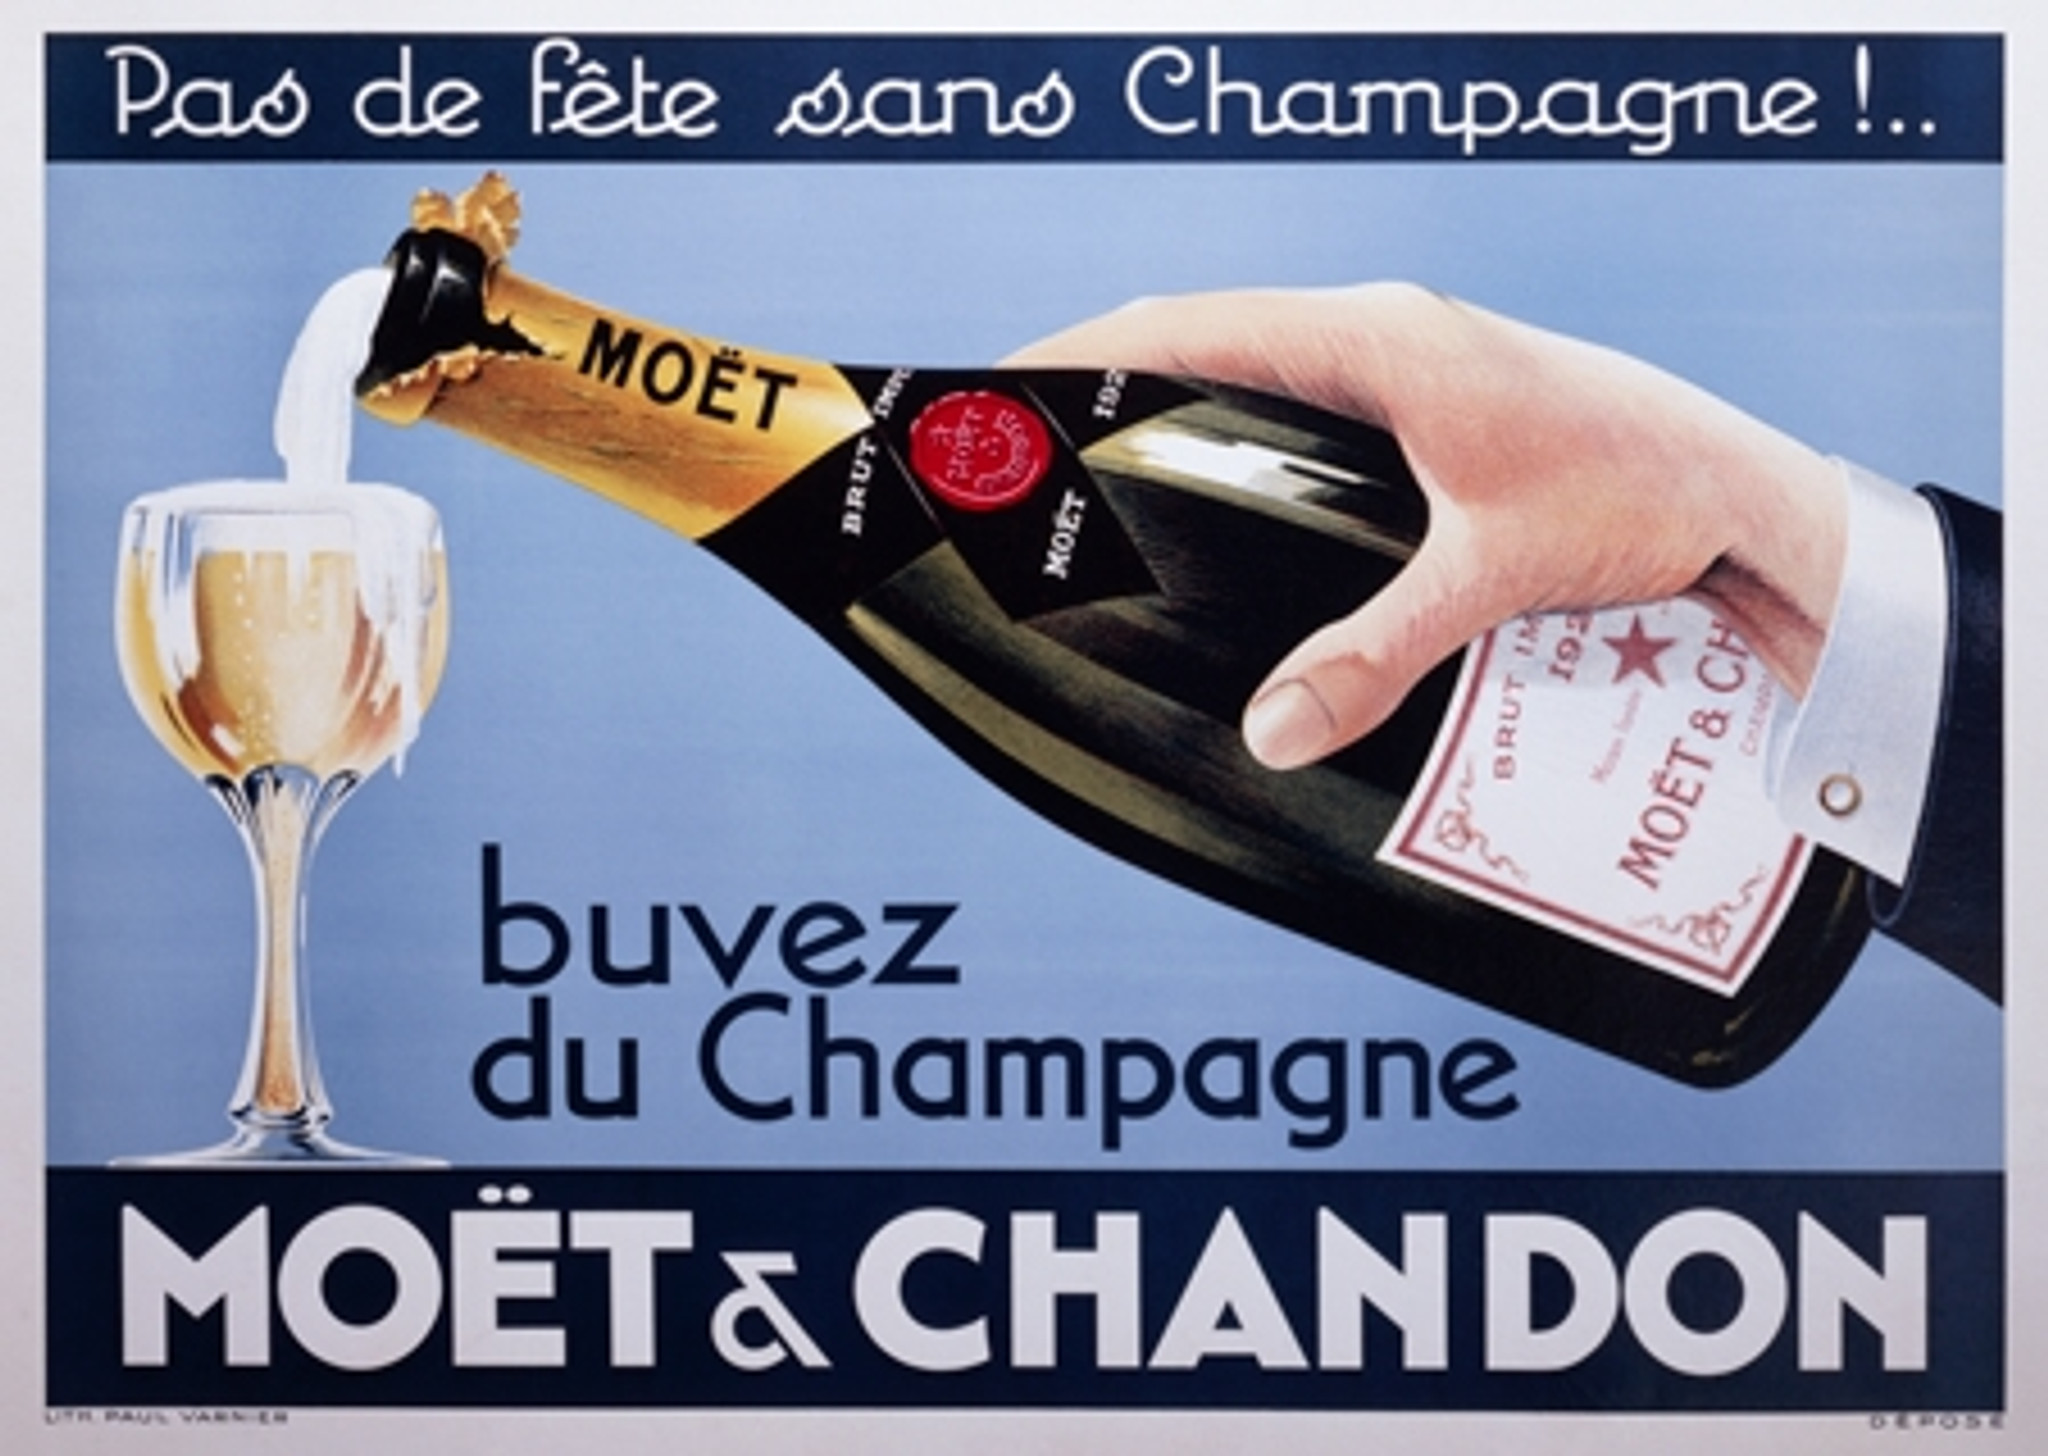 Champagne Moet & Chandon